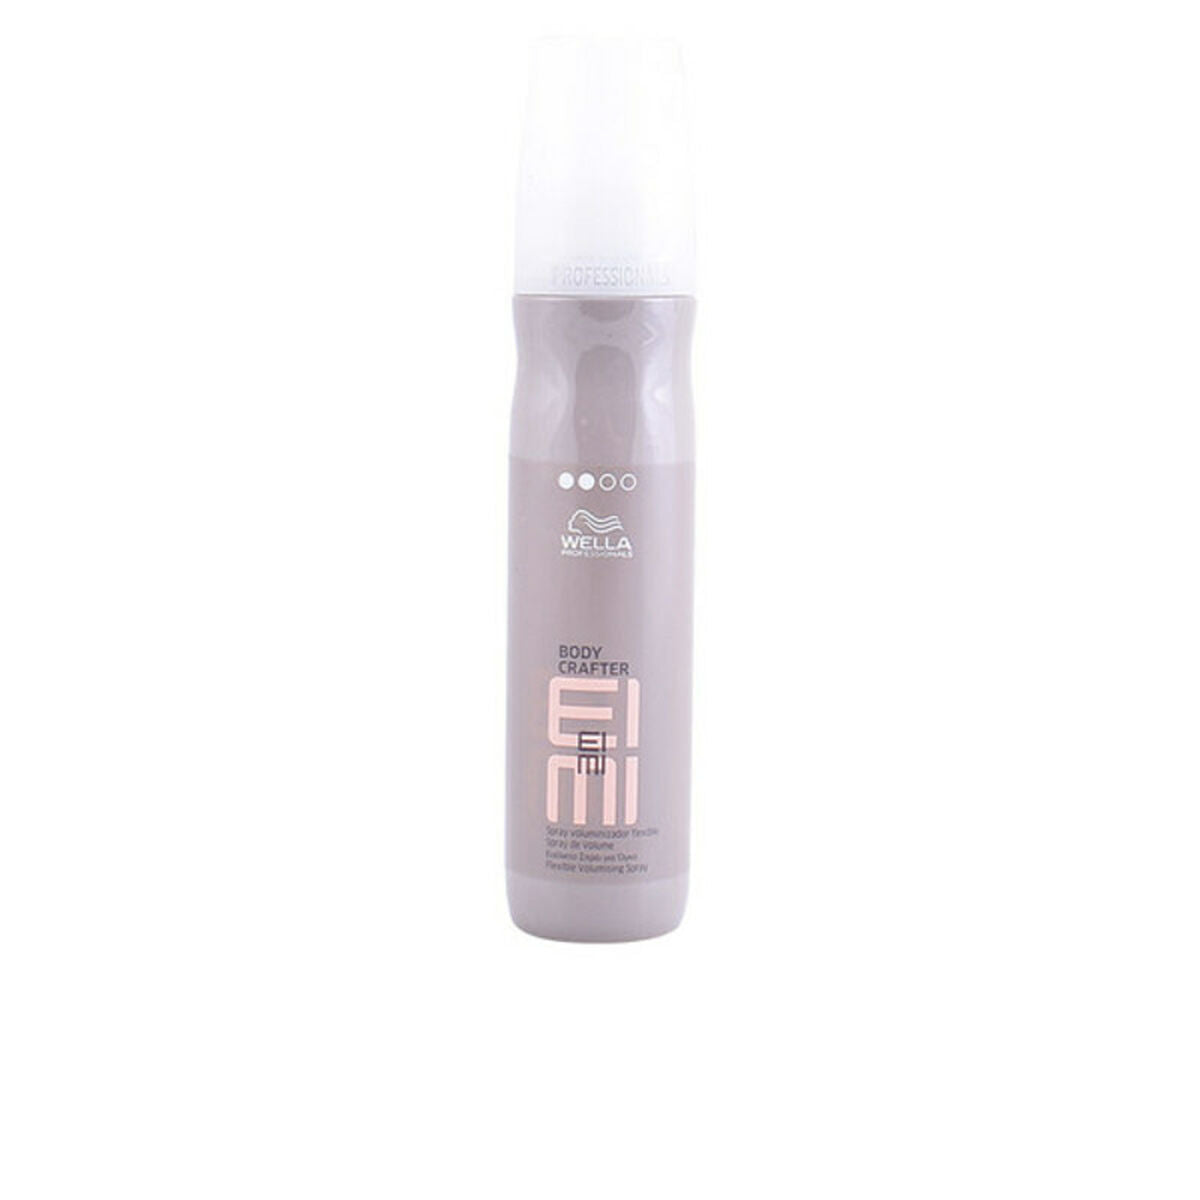 Spray de cabelo EIMI Body Crafter Wella 8.00561e+12 150 ml